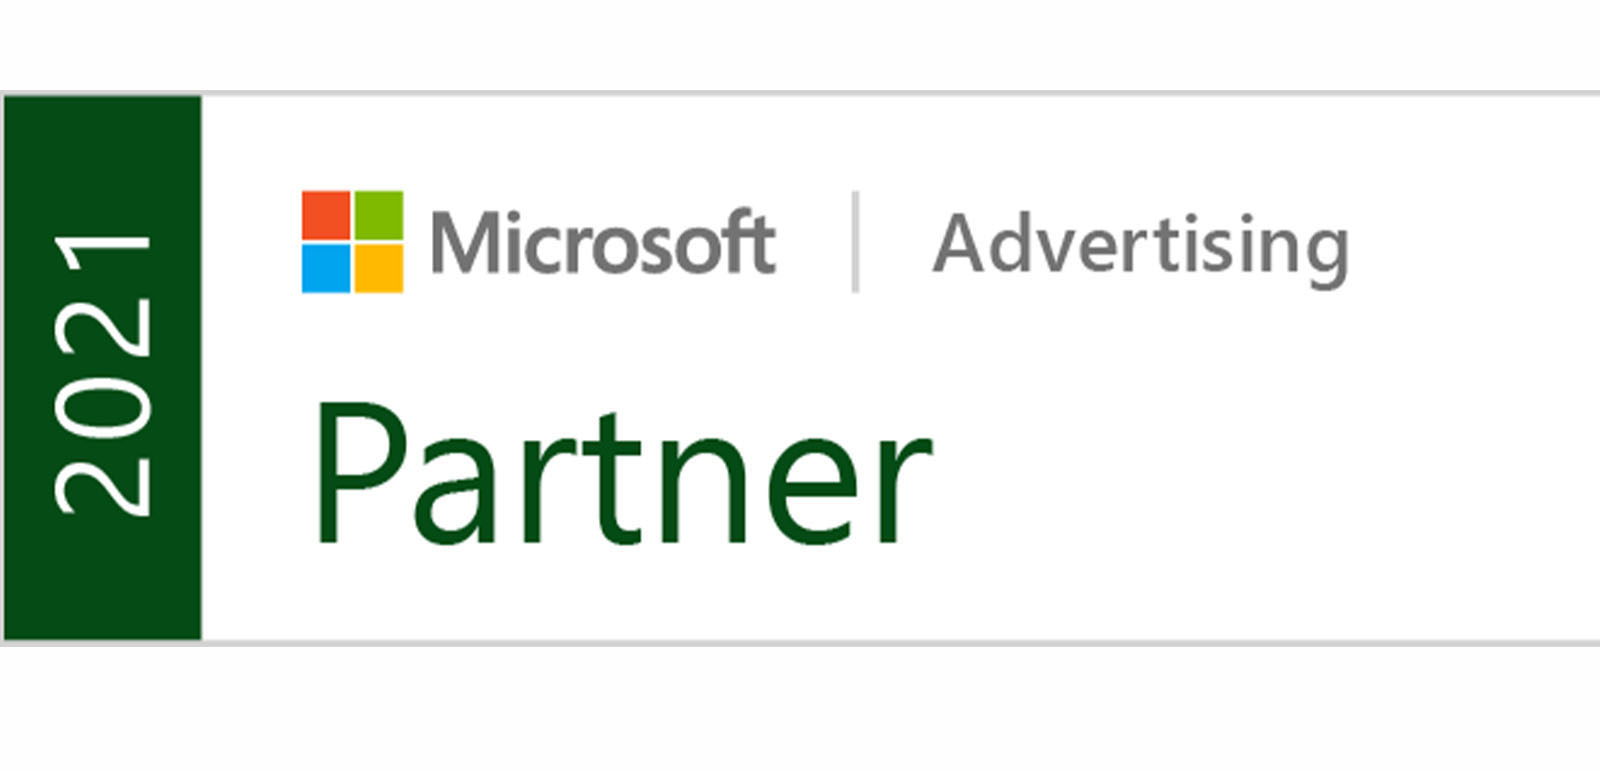 Microsoft|Advertising partner